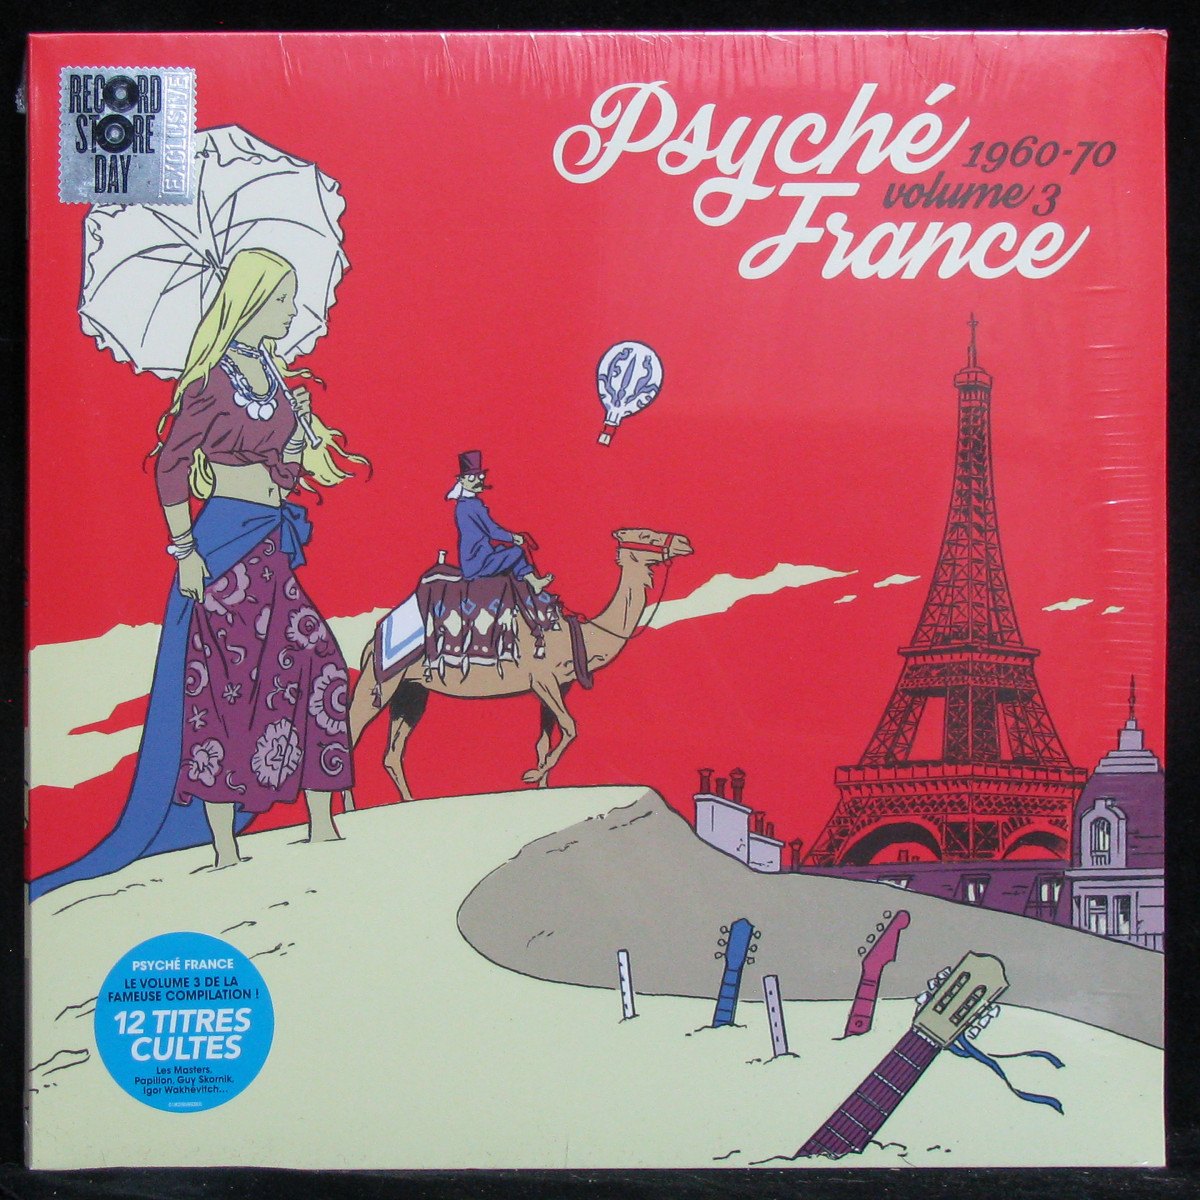 Psyche France 1960-70 Volume 3